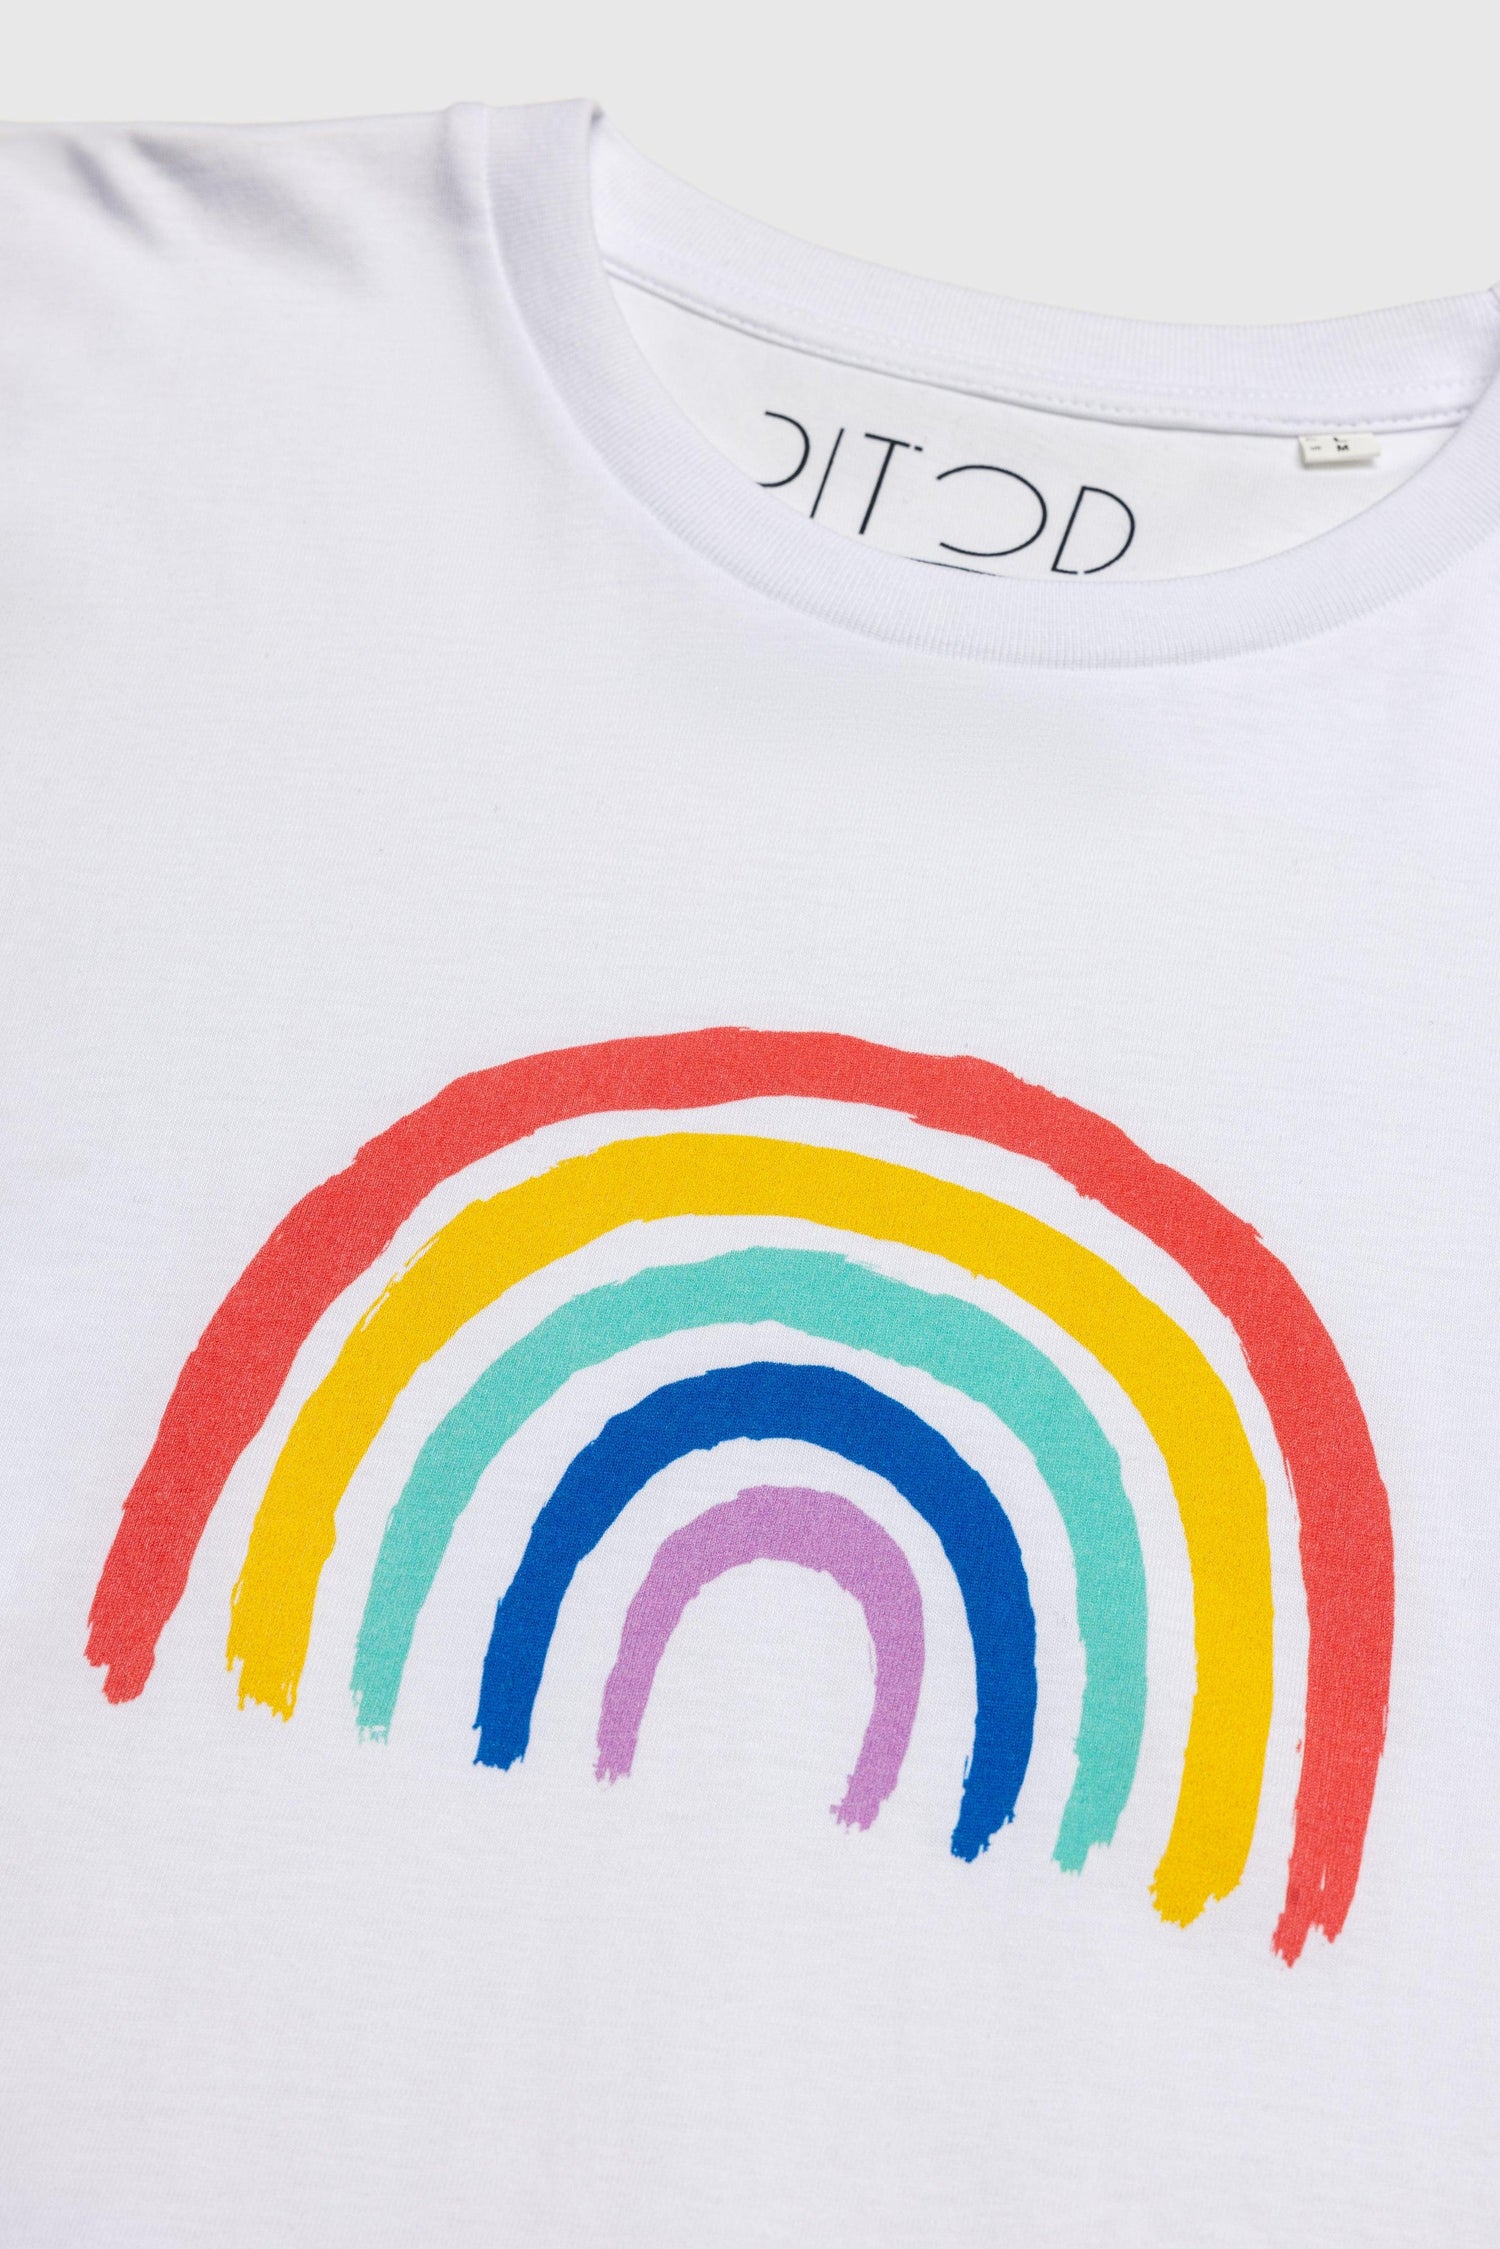 Rainbow T-Shirt | Shirts & Tops | pitod.com